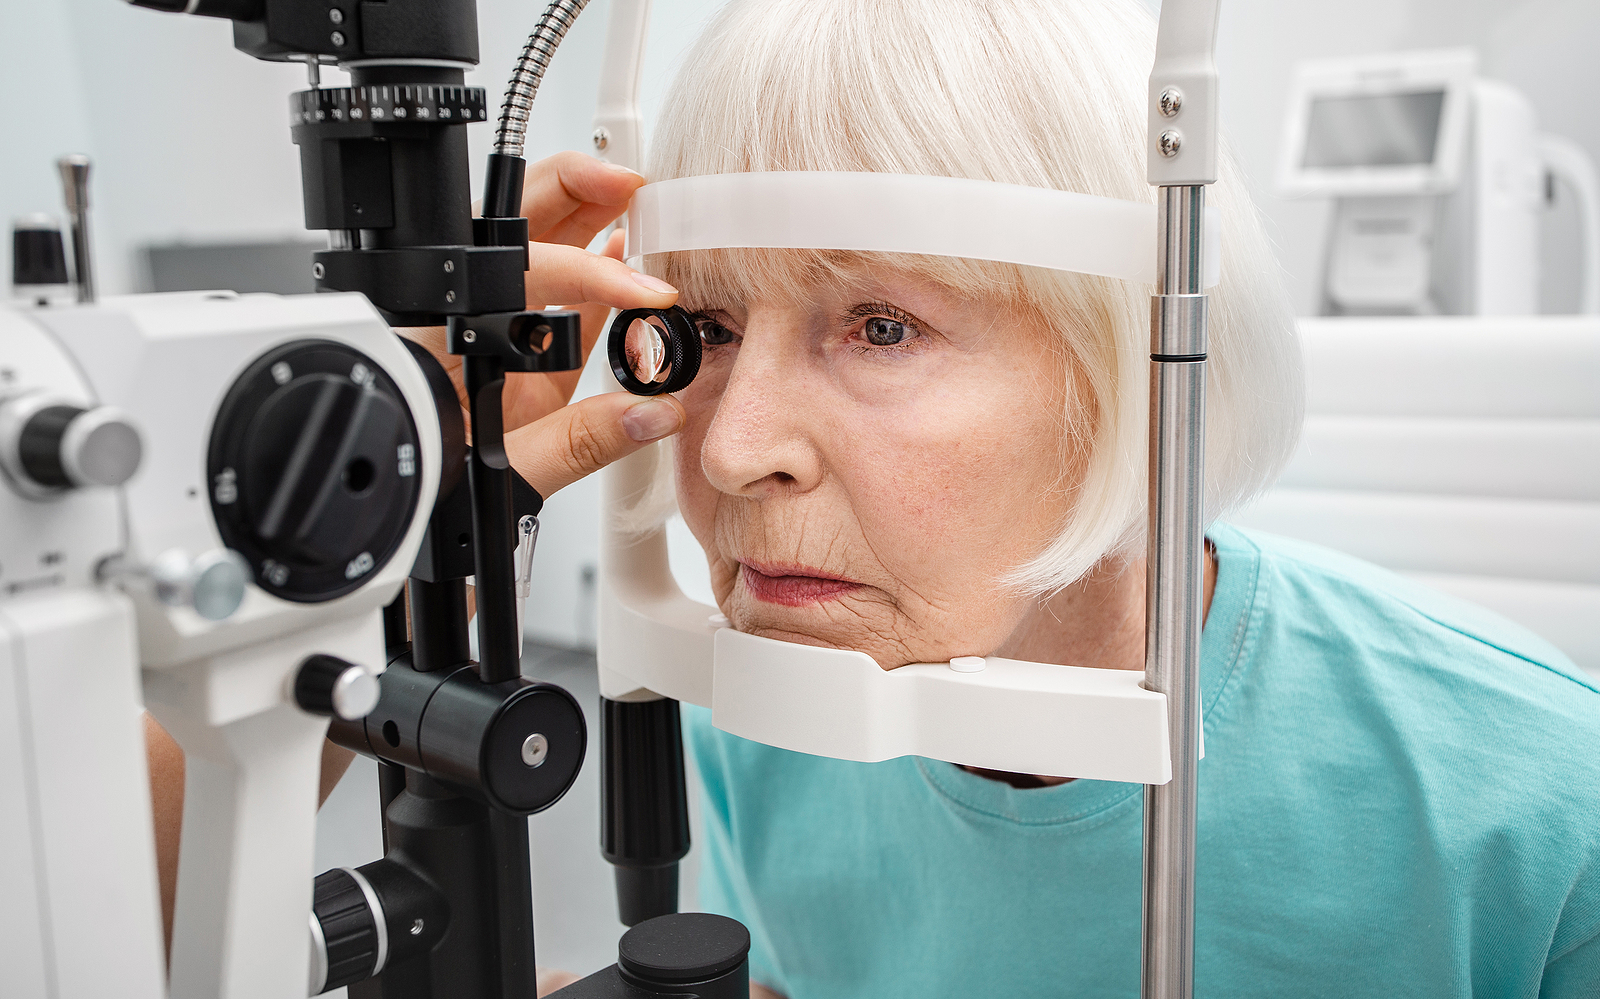 Senior woman eyesight test with binocular slit-lamp. Checking retina of a female eye close-up. Vision correction of elderly people